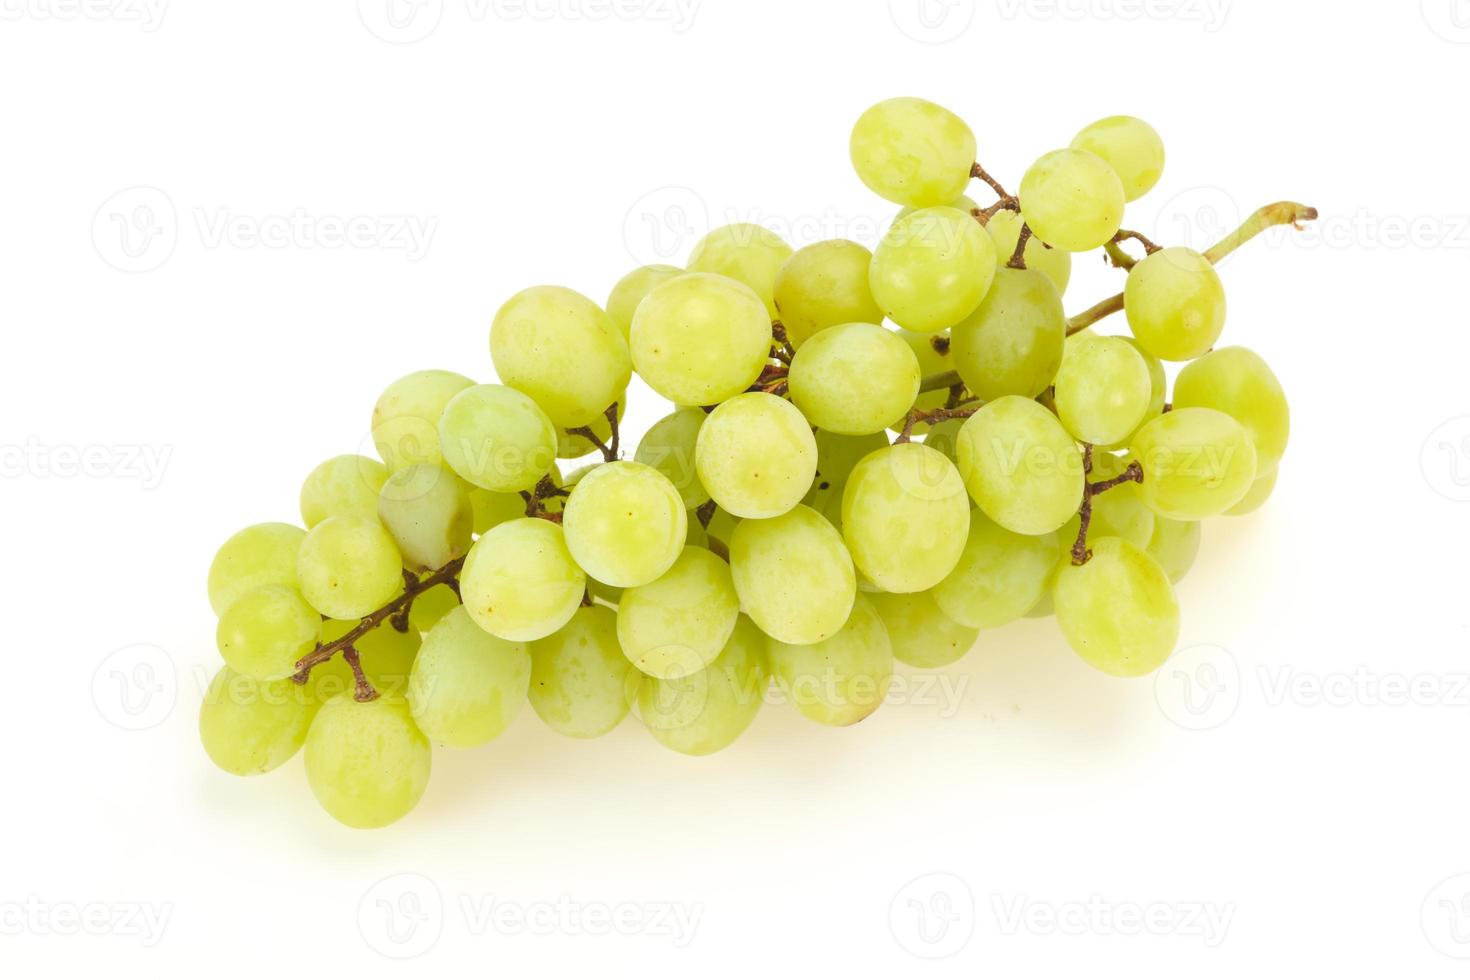 dulce rama de uva verde madura foto